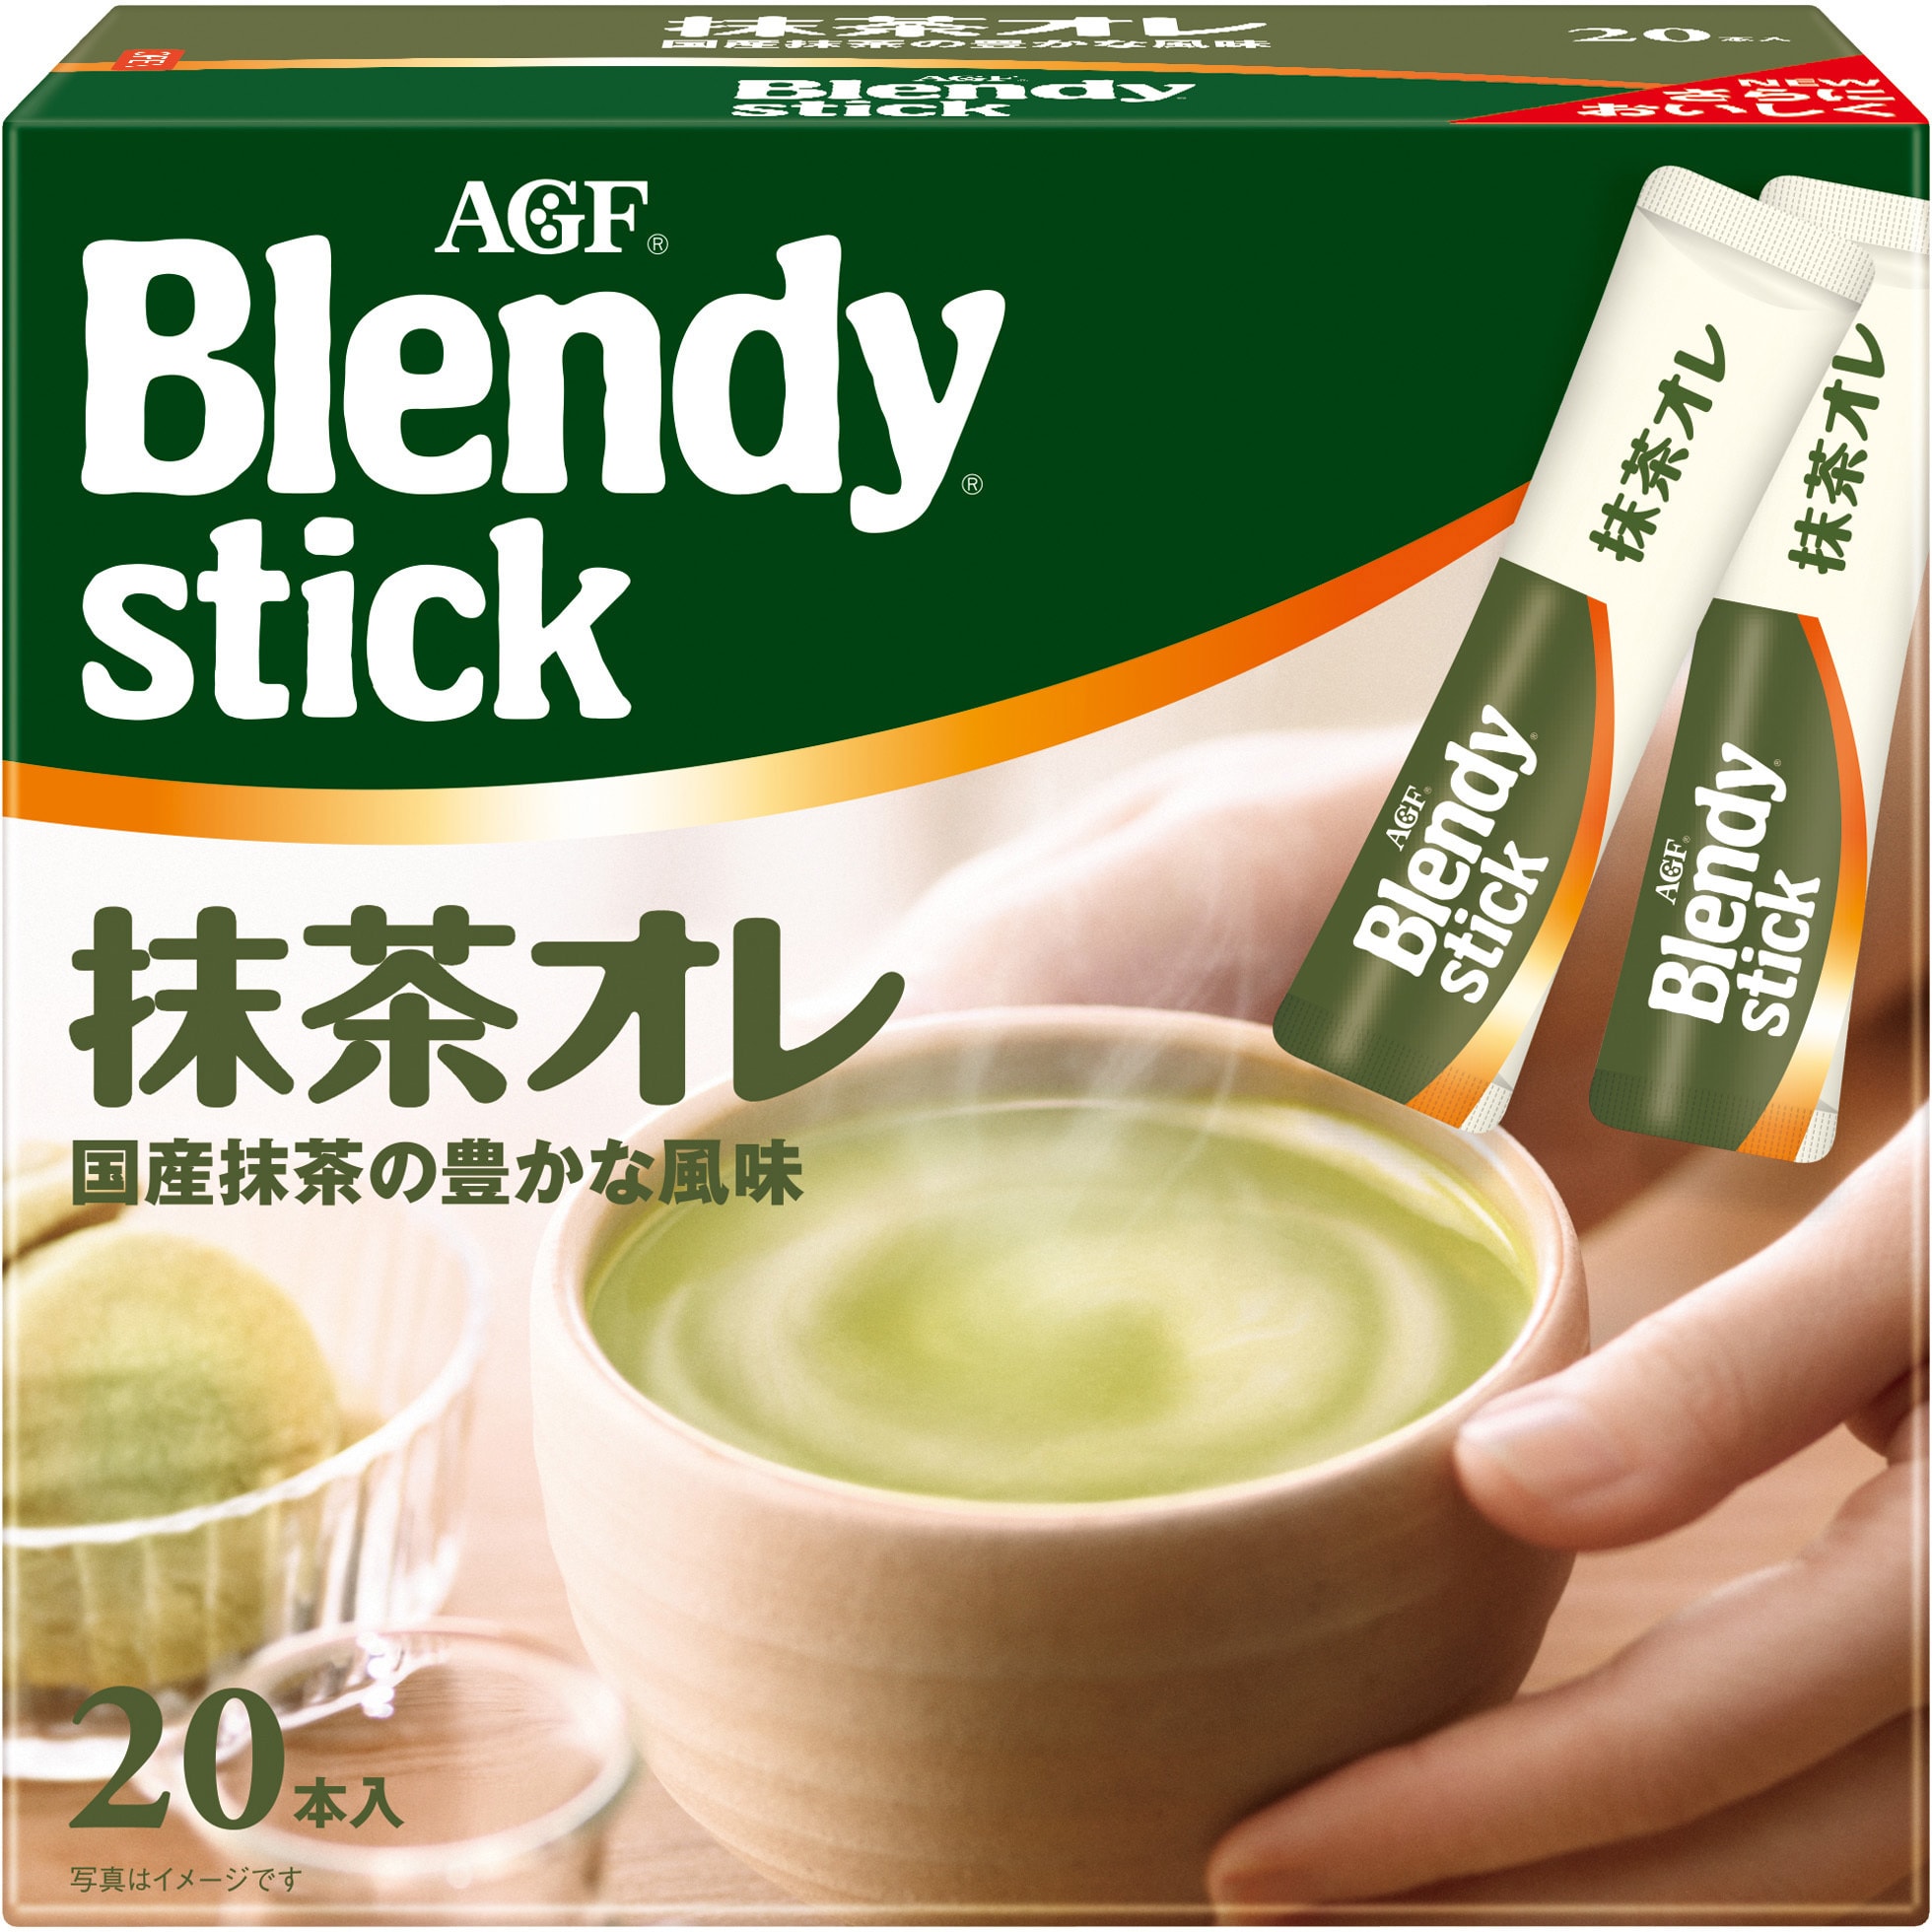 AGF ブレンディスティック 抹茶オレ 1箱(20本) AGF(味の素AGF) 【通販